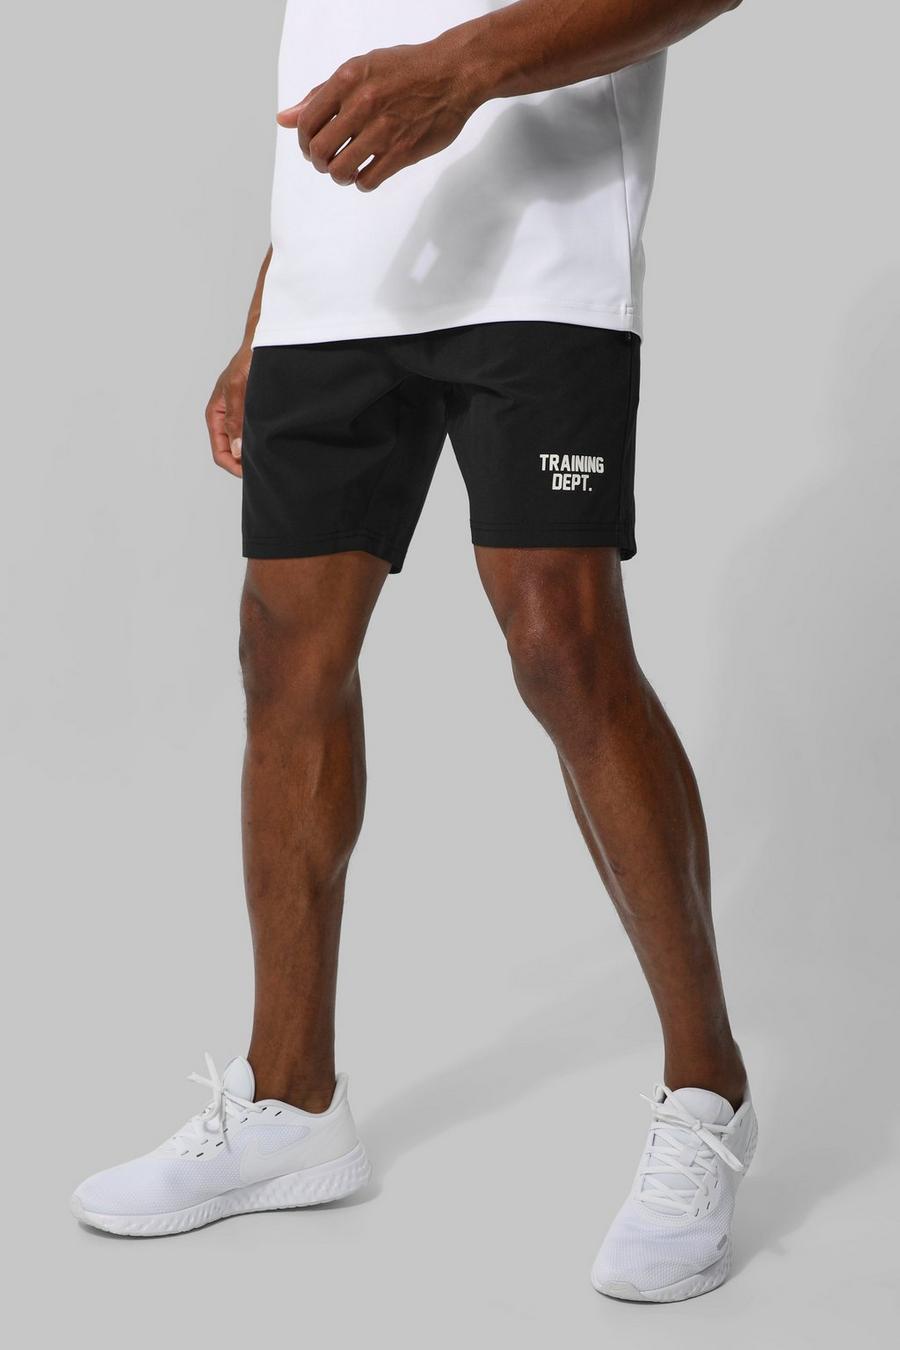 Black schwarz Man Active Performance Training Dept 5inch Shorts